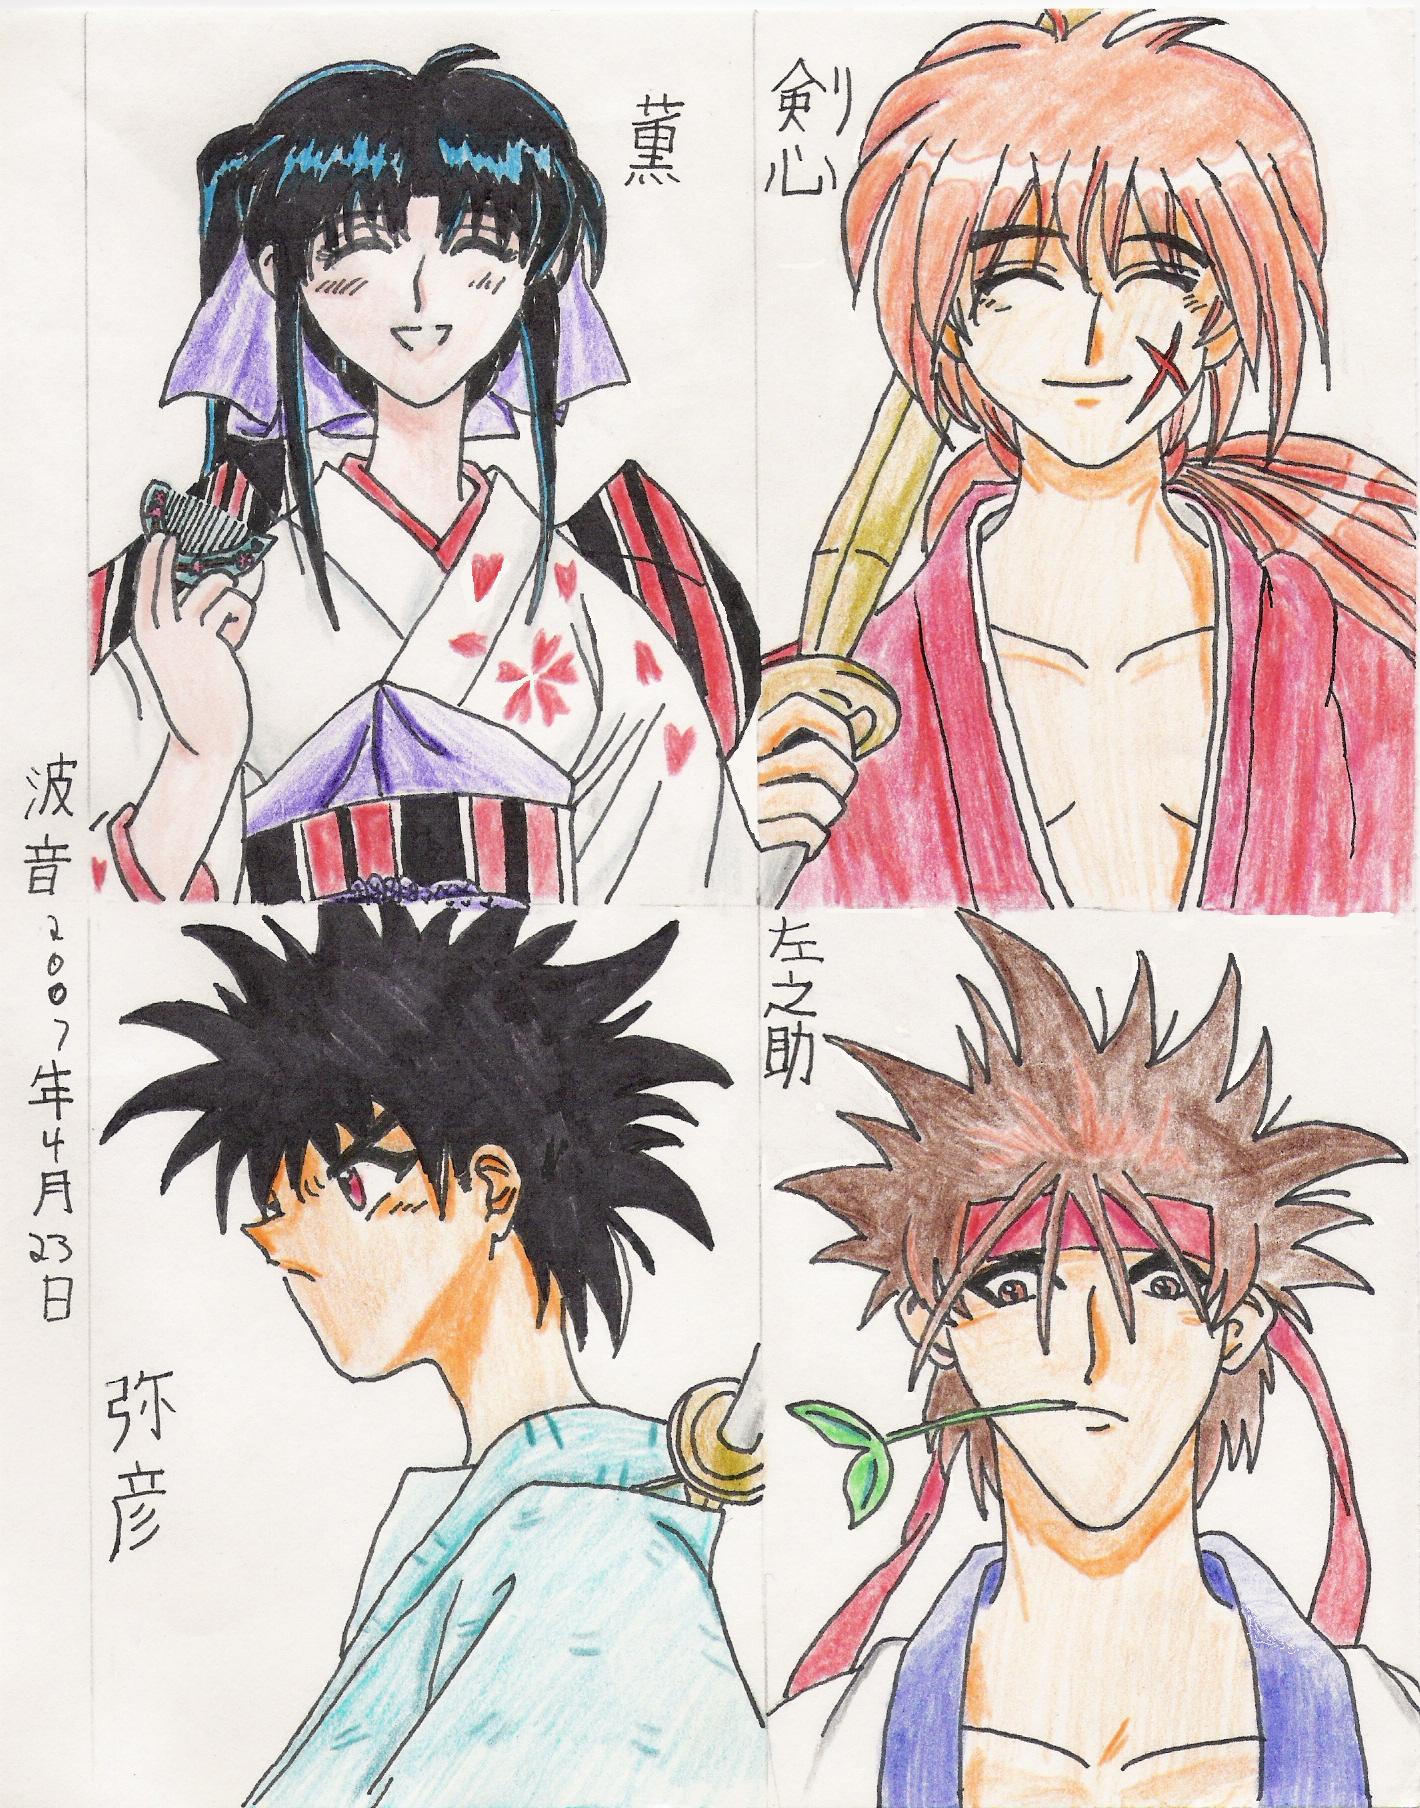 Kenshin-gumi (colored) by zeldaiskool